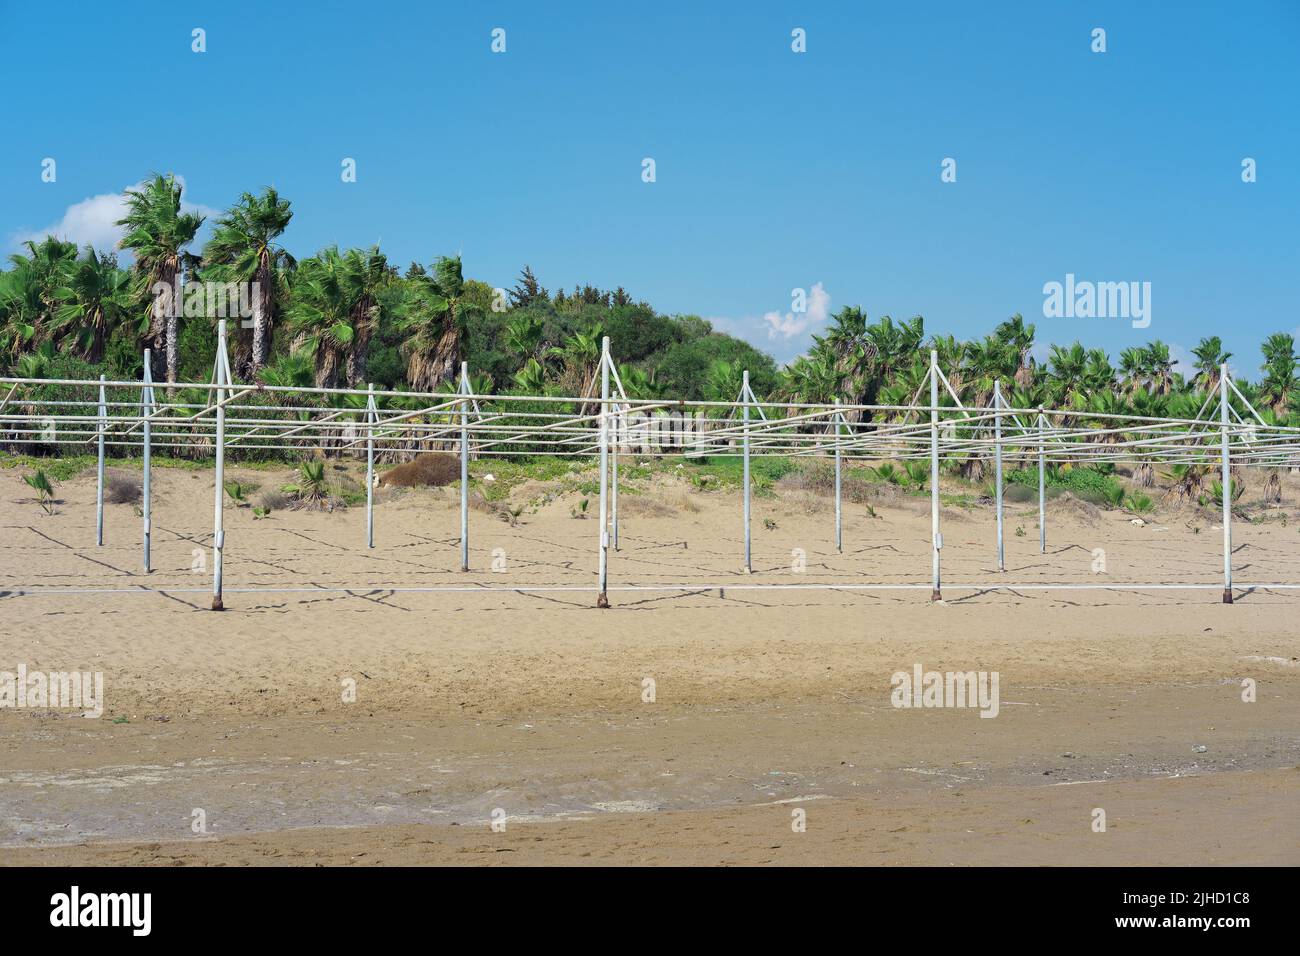 Palm trees at sandy beach Stock Photo